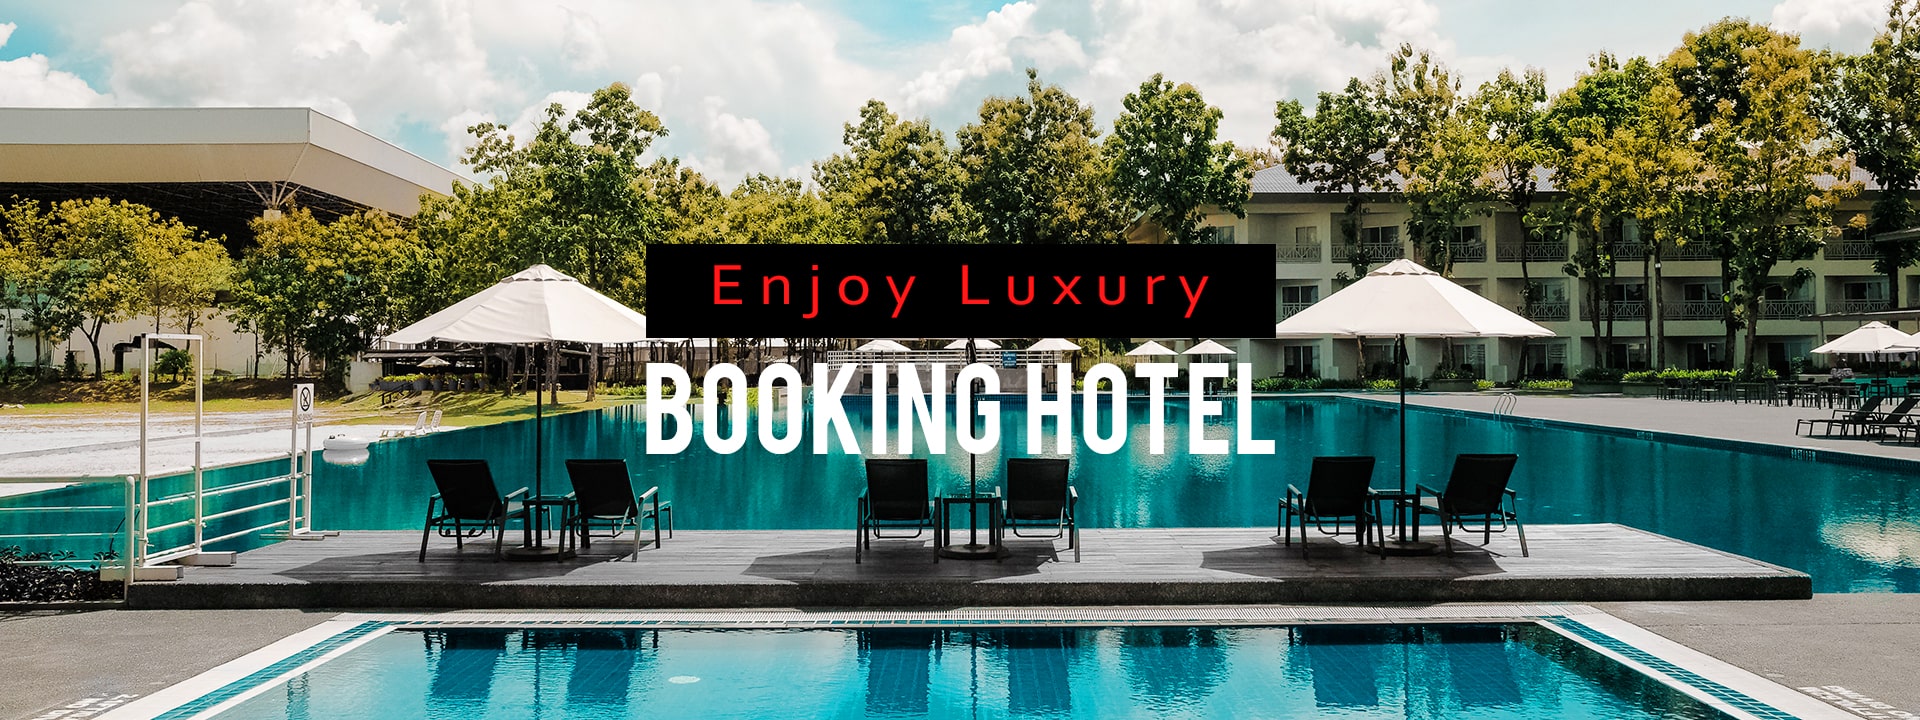 Luxury Hotel booking